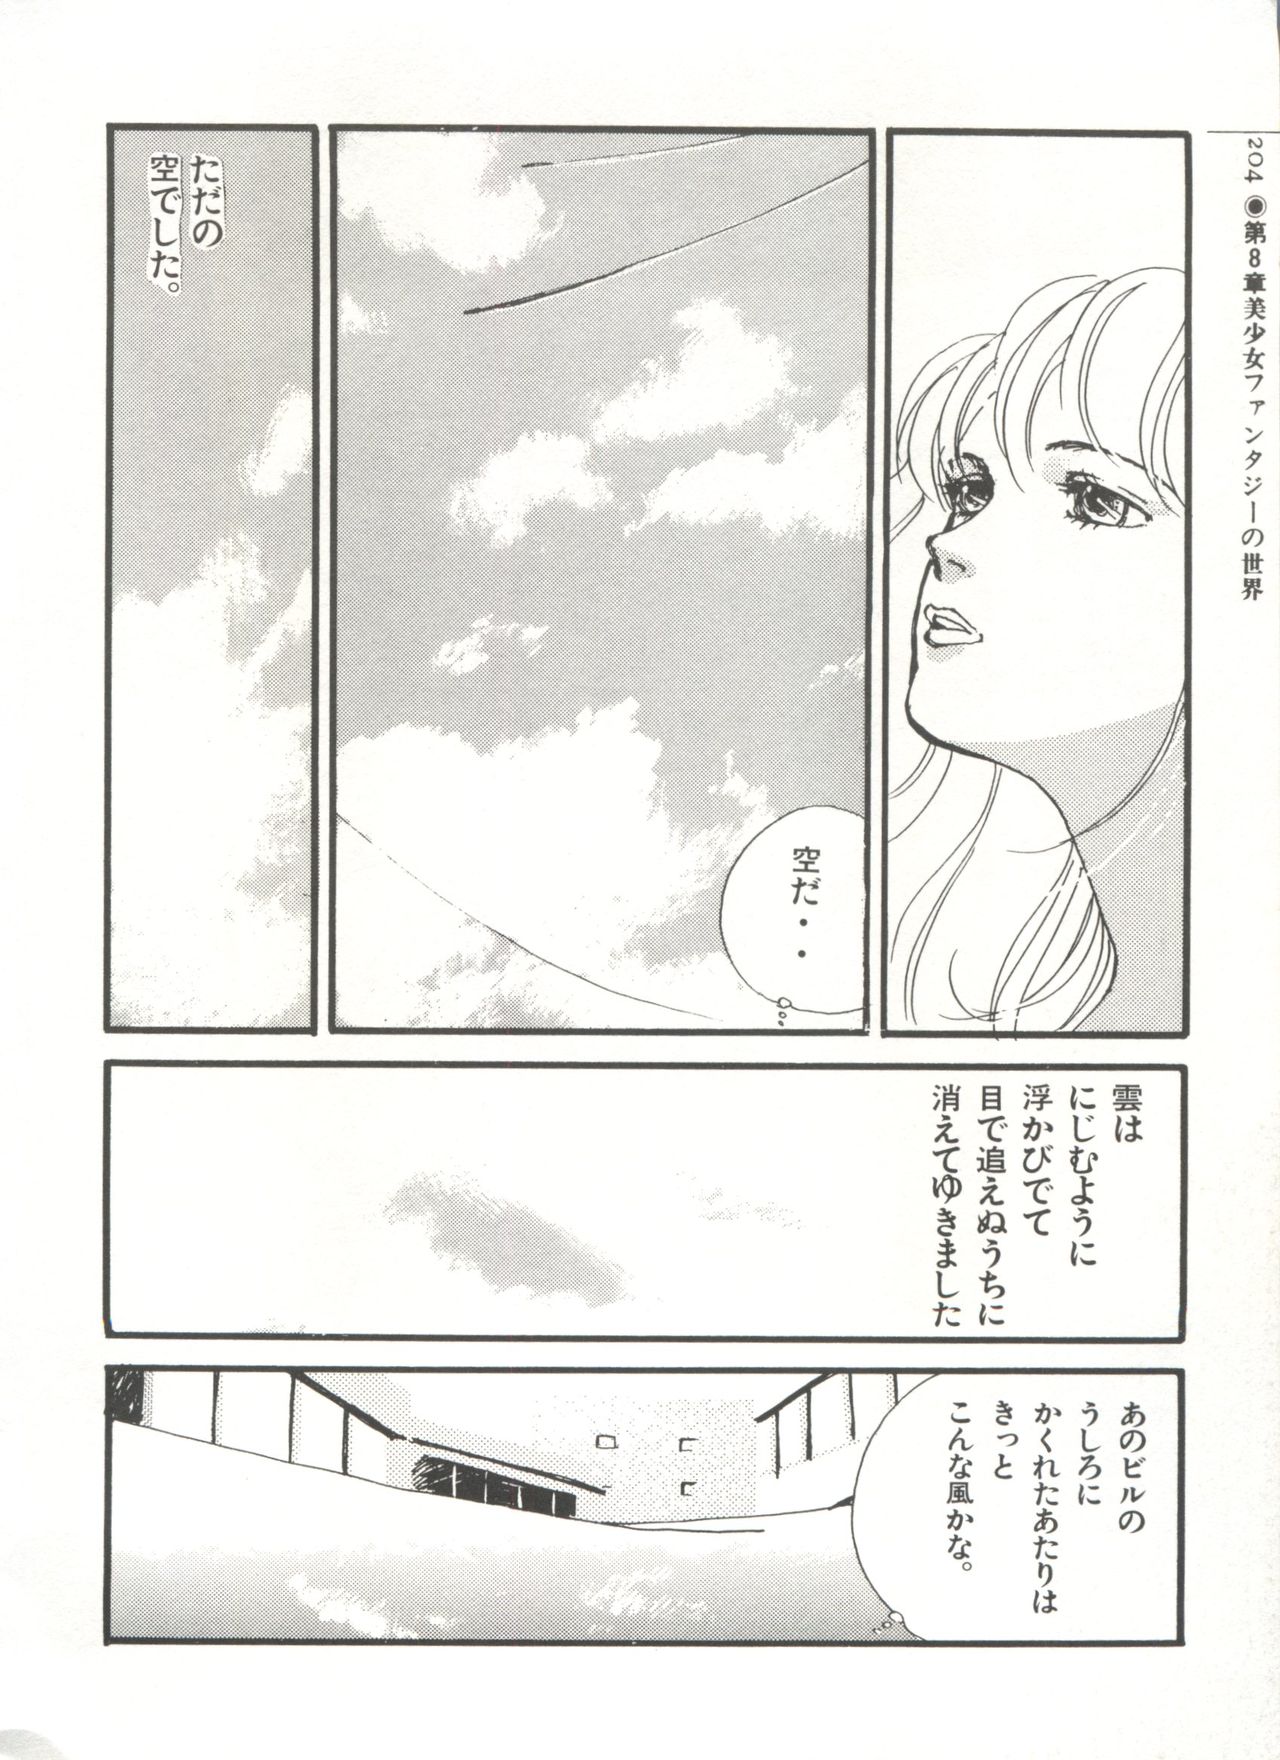 [Anthology] 美少女症候群(2) Lolita syndrome (よろず)